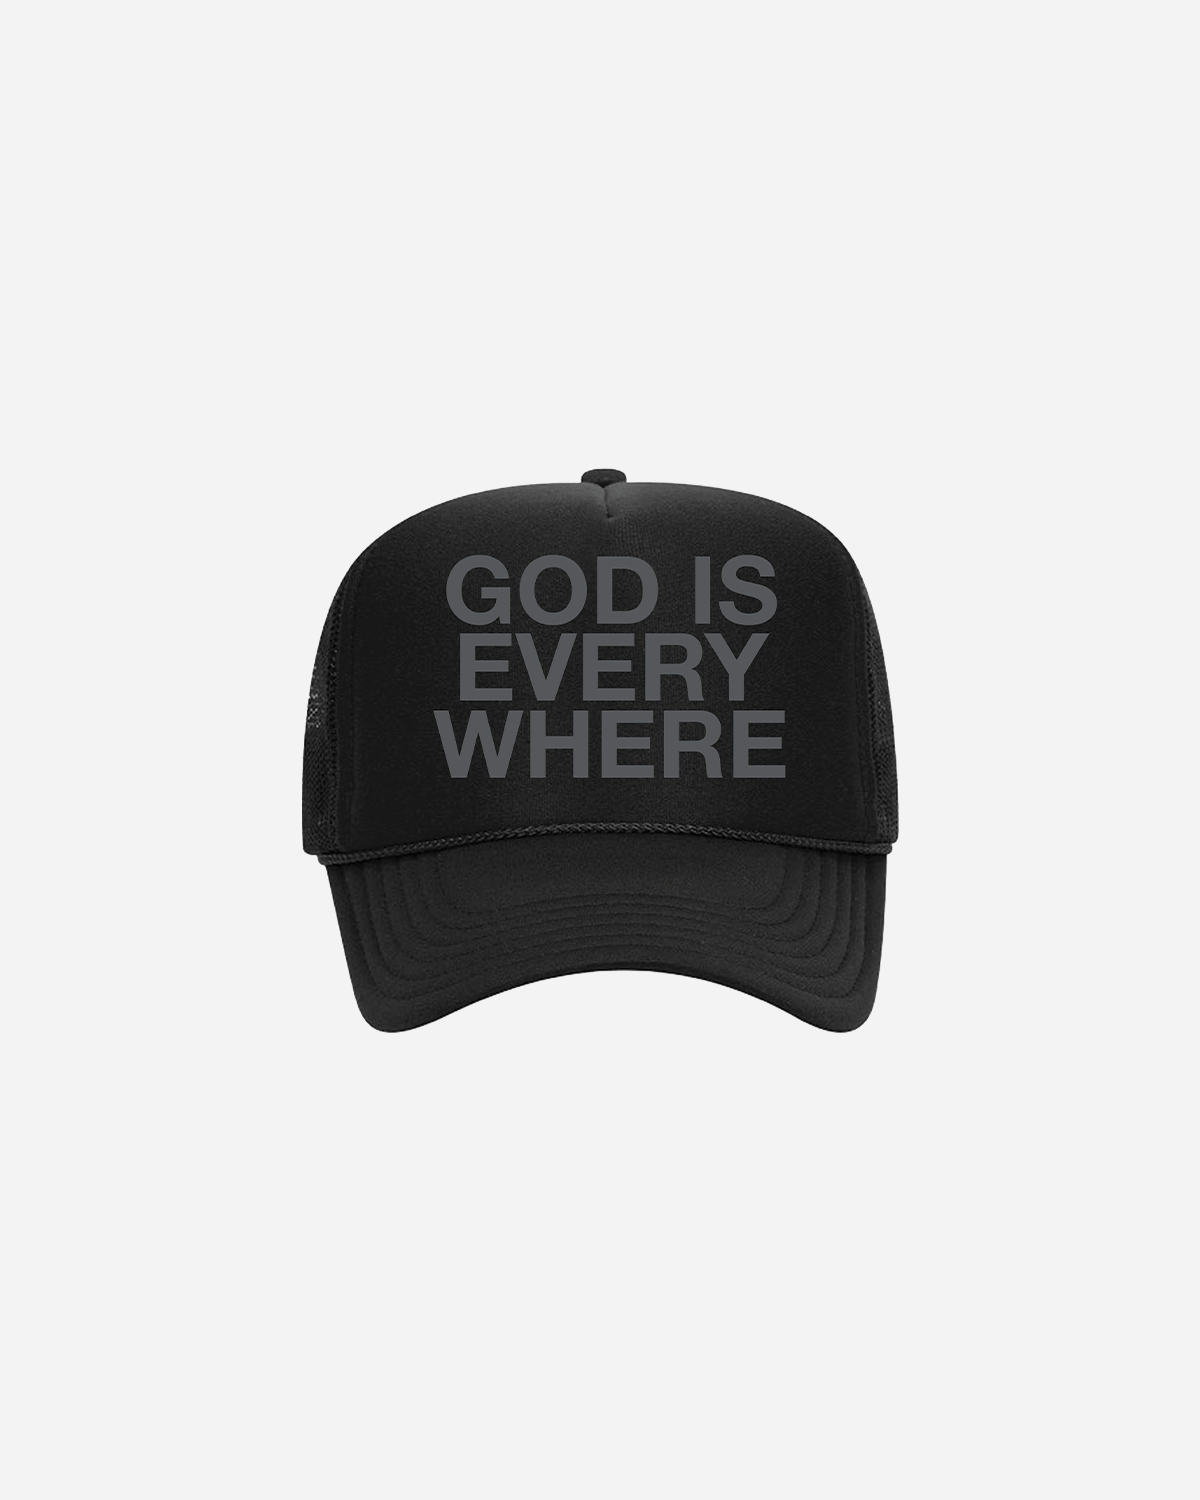 God is Everywhere Black Trucker Hat with grey writing, NHIM APPAREL